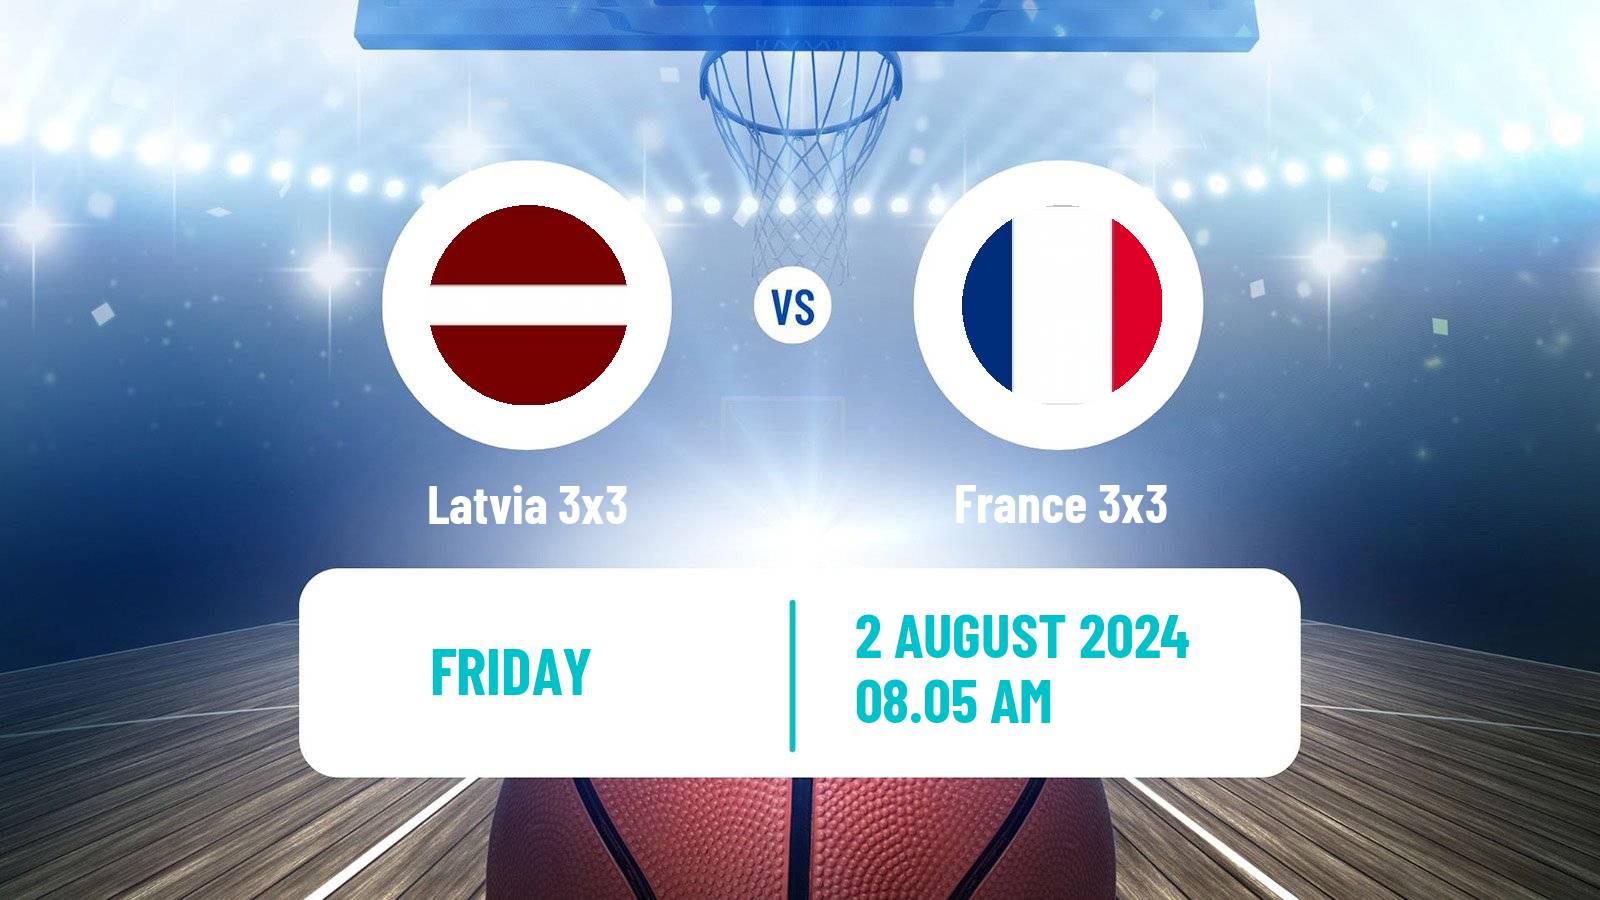 Basketball Olympic Games Basketball 3x3 Latvia 3x3 - France 3x3